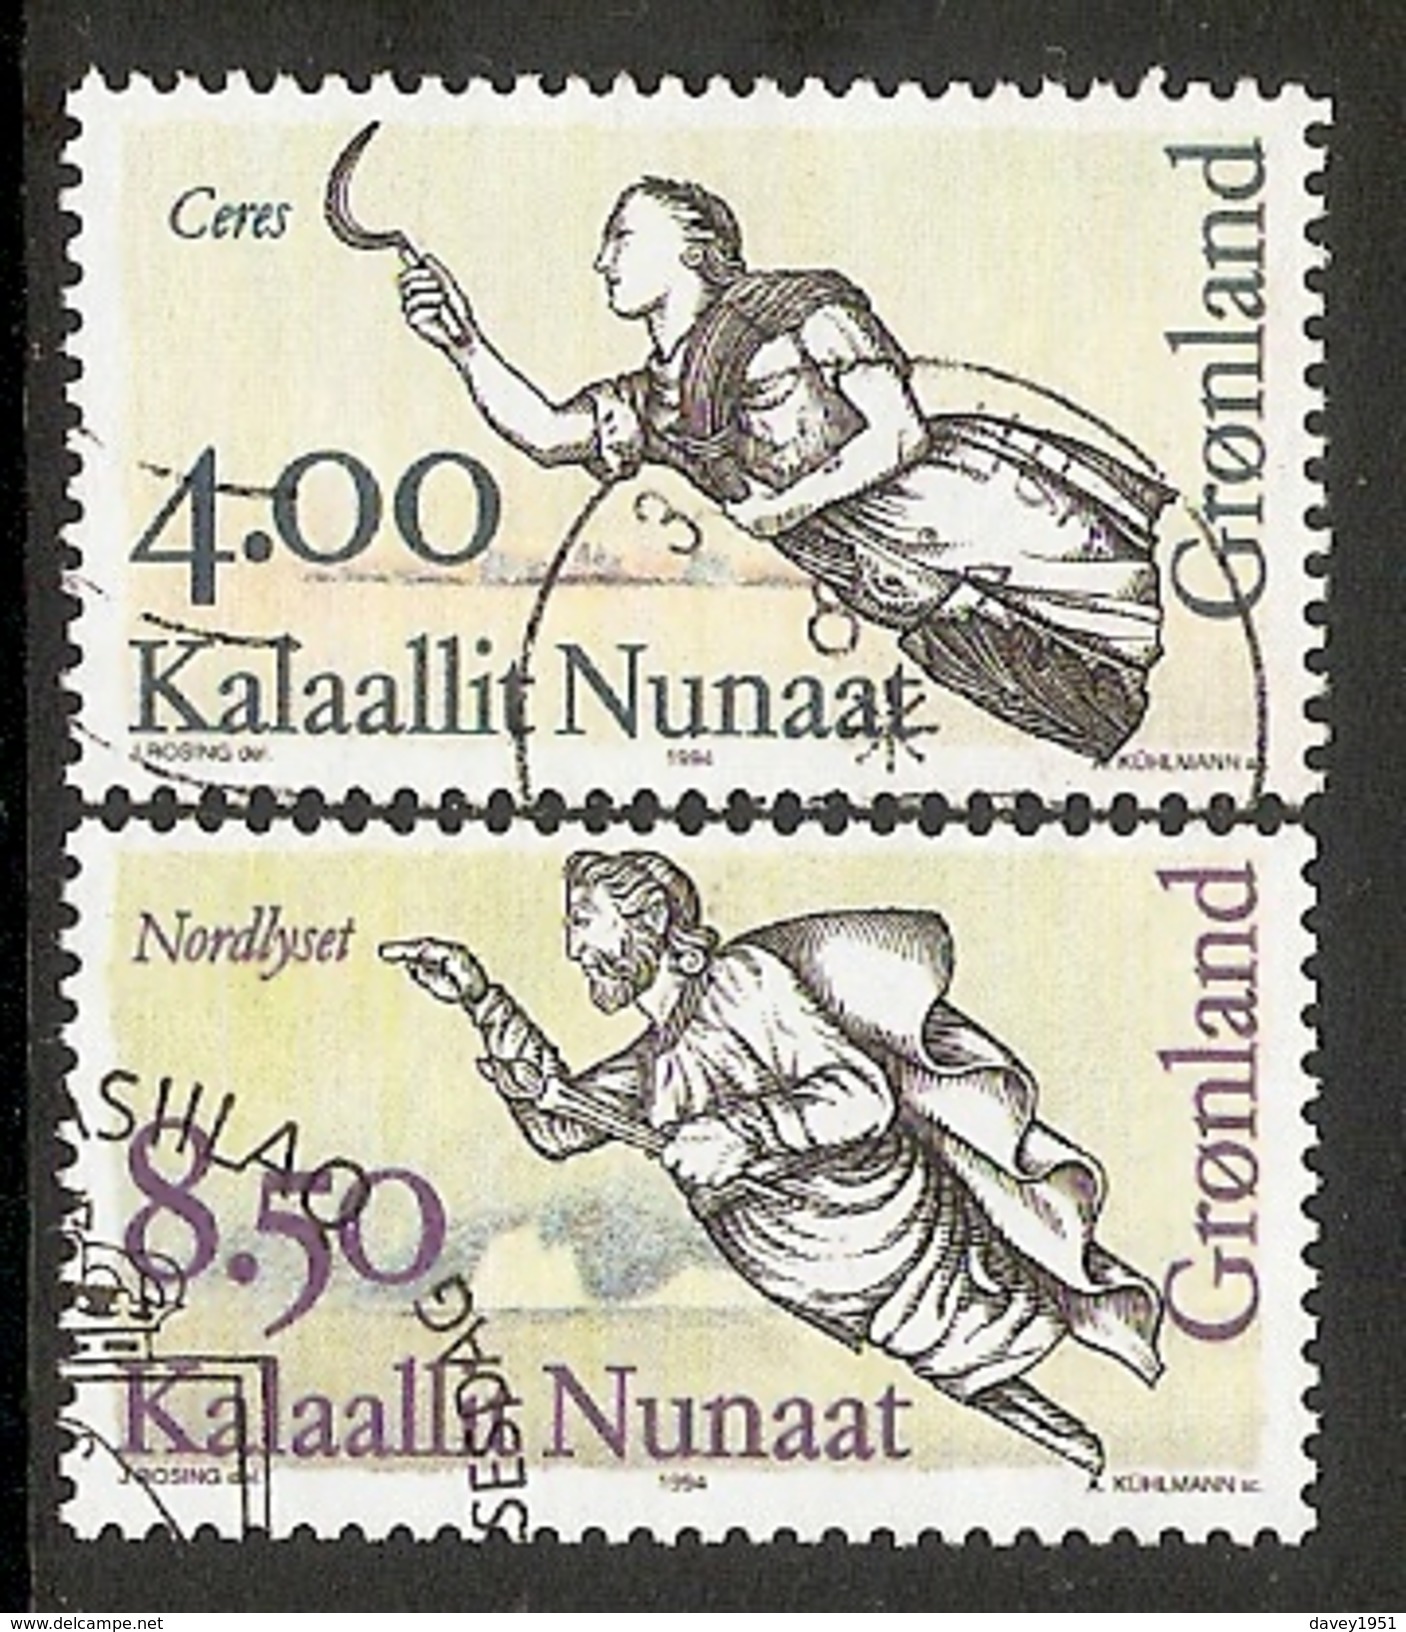 004172 Greenland 1994 Figureheads Set FU - Used Stamps